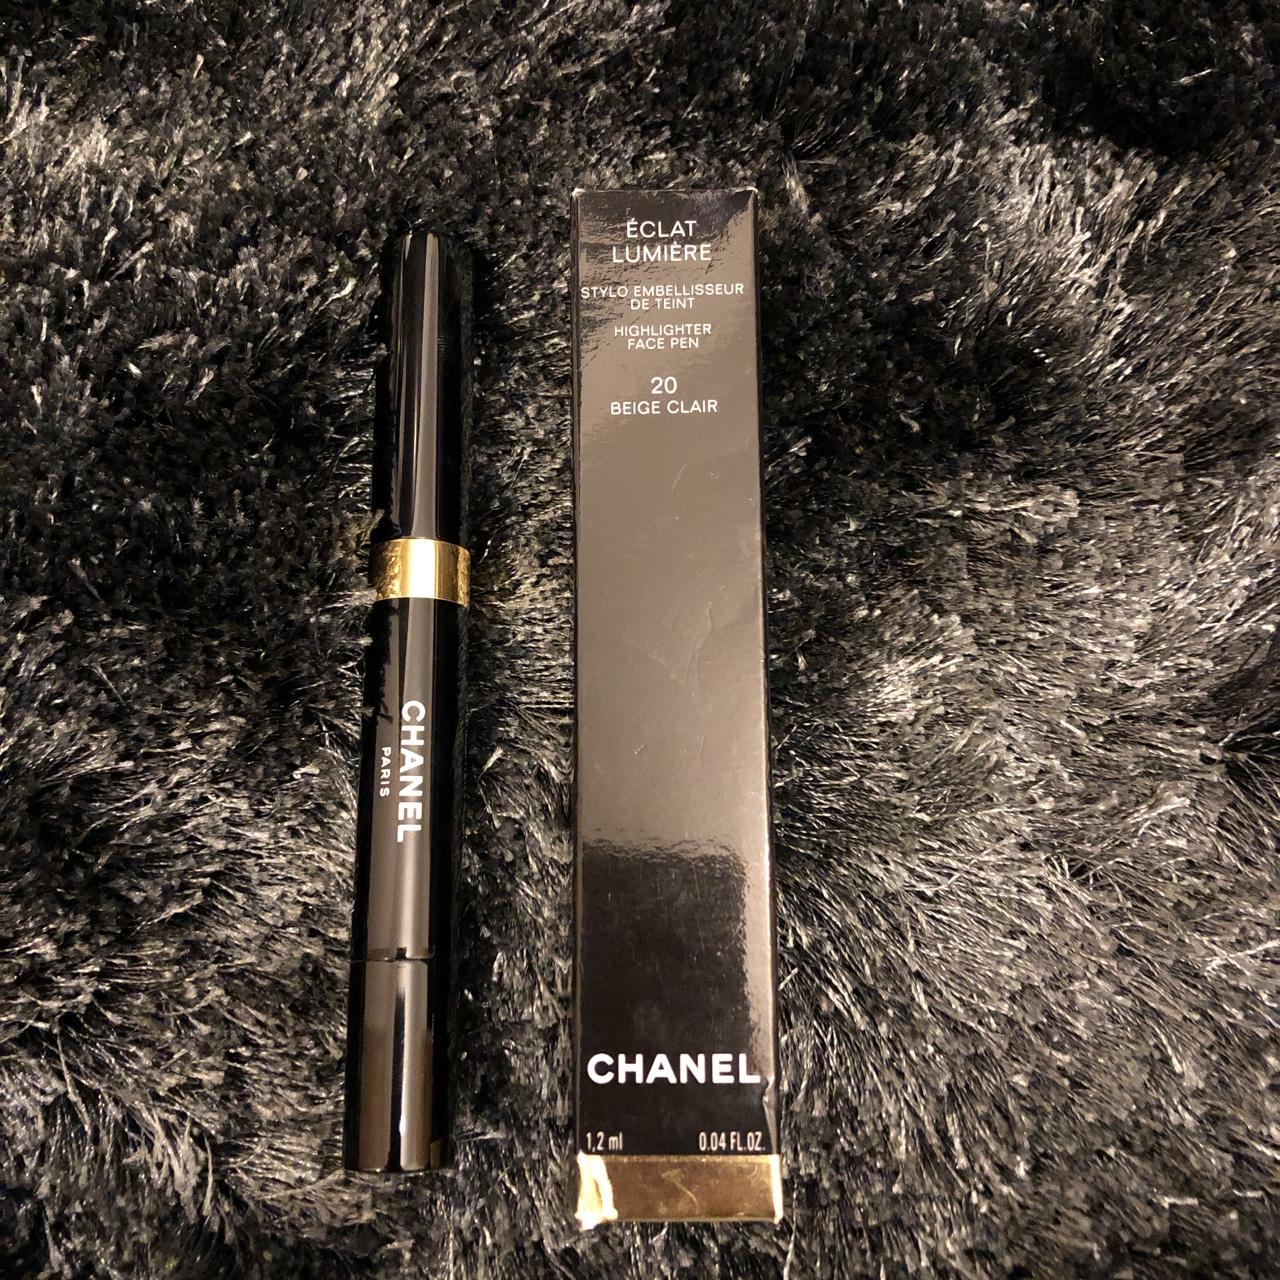 Eclat Lumiere 20 Beige Claire Chanel Highlighter - Depop